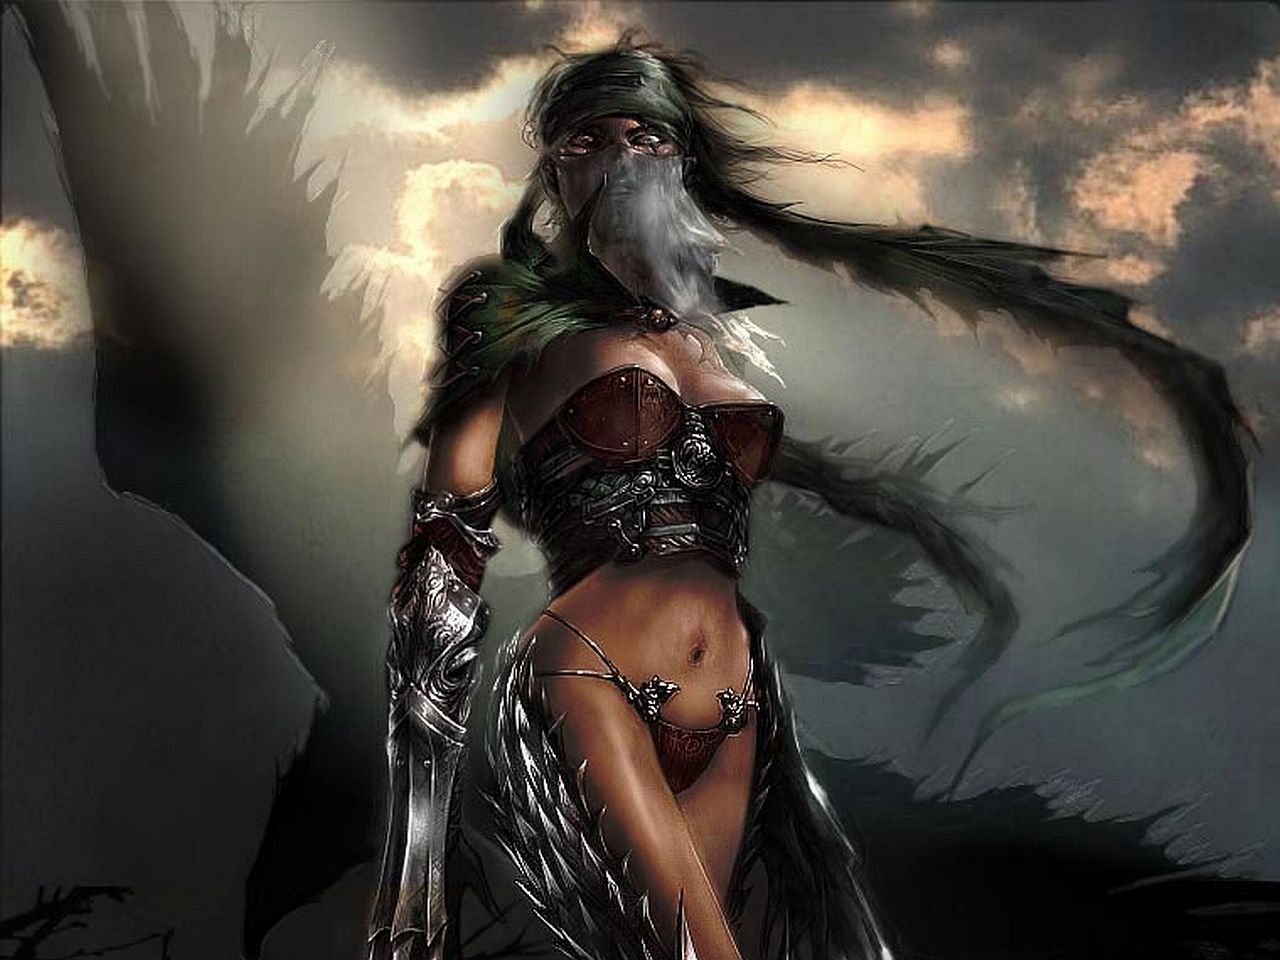 Fantasy Art Women Warriors. Women Warrior Computer Wallpaper, Desktop Background 1280x960 Id. Warrior girl, Warrior woman, Fantasy female warrior